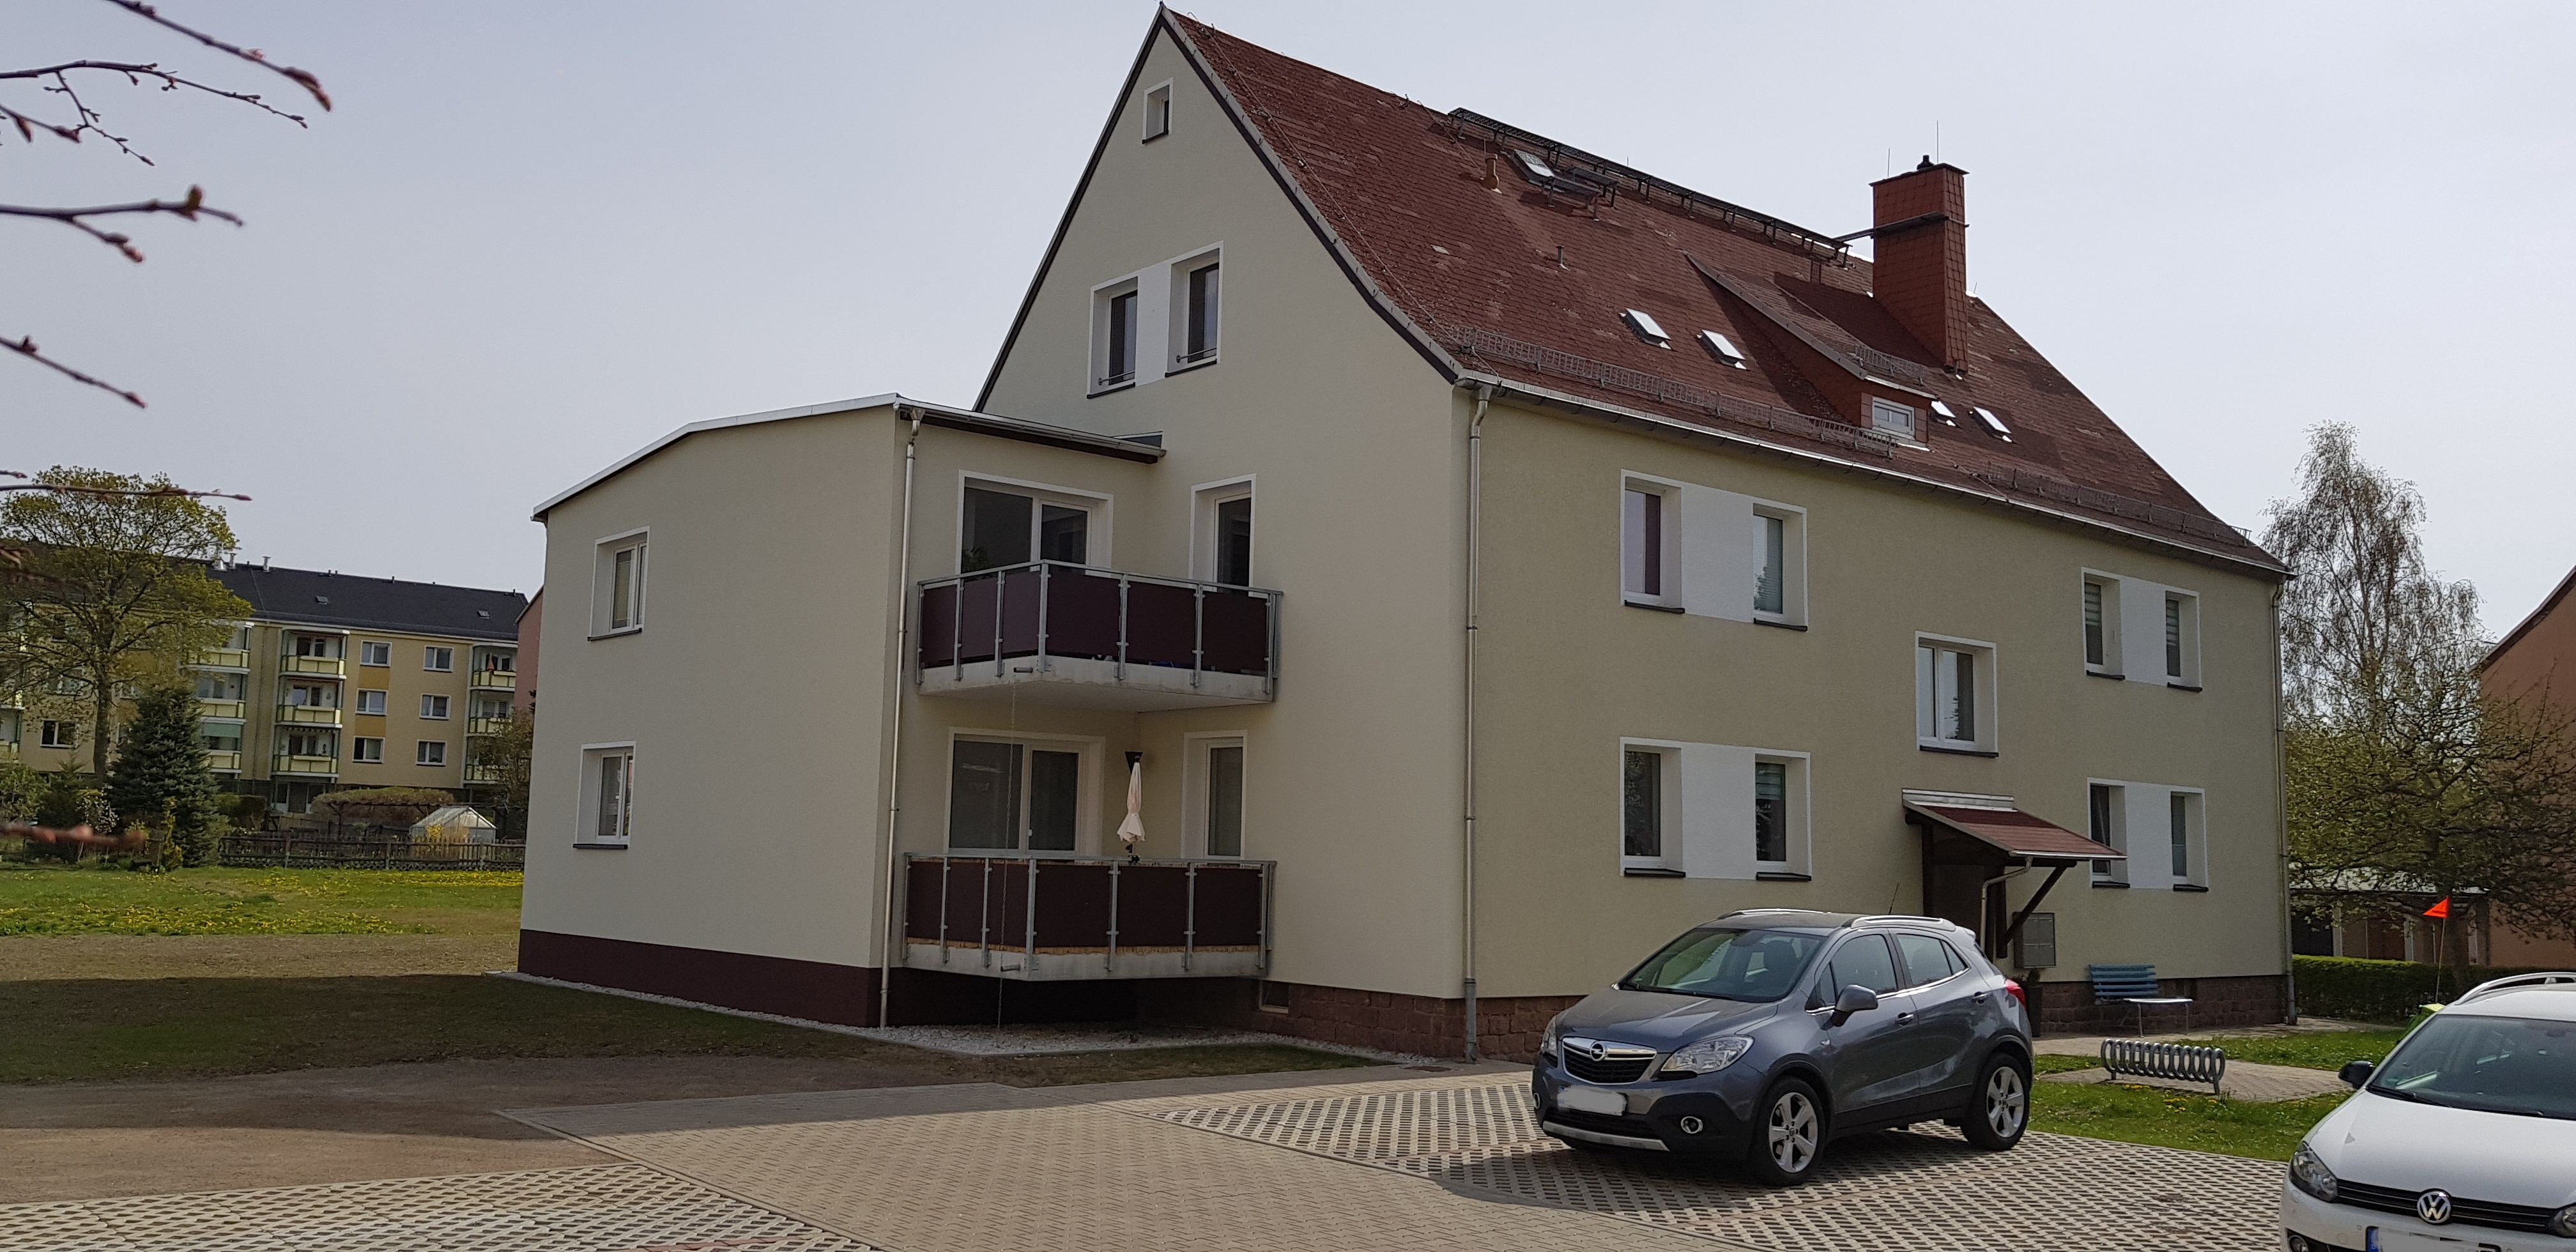 Kirchweg 29 – Anbau an ein 4-Familienhaus fertiggestellt